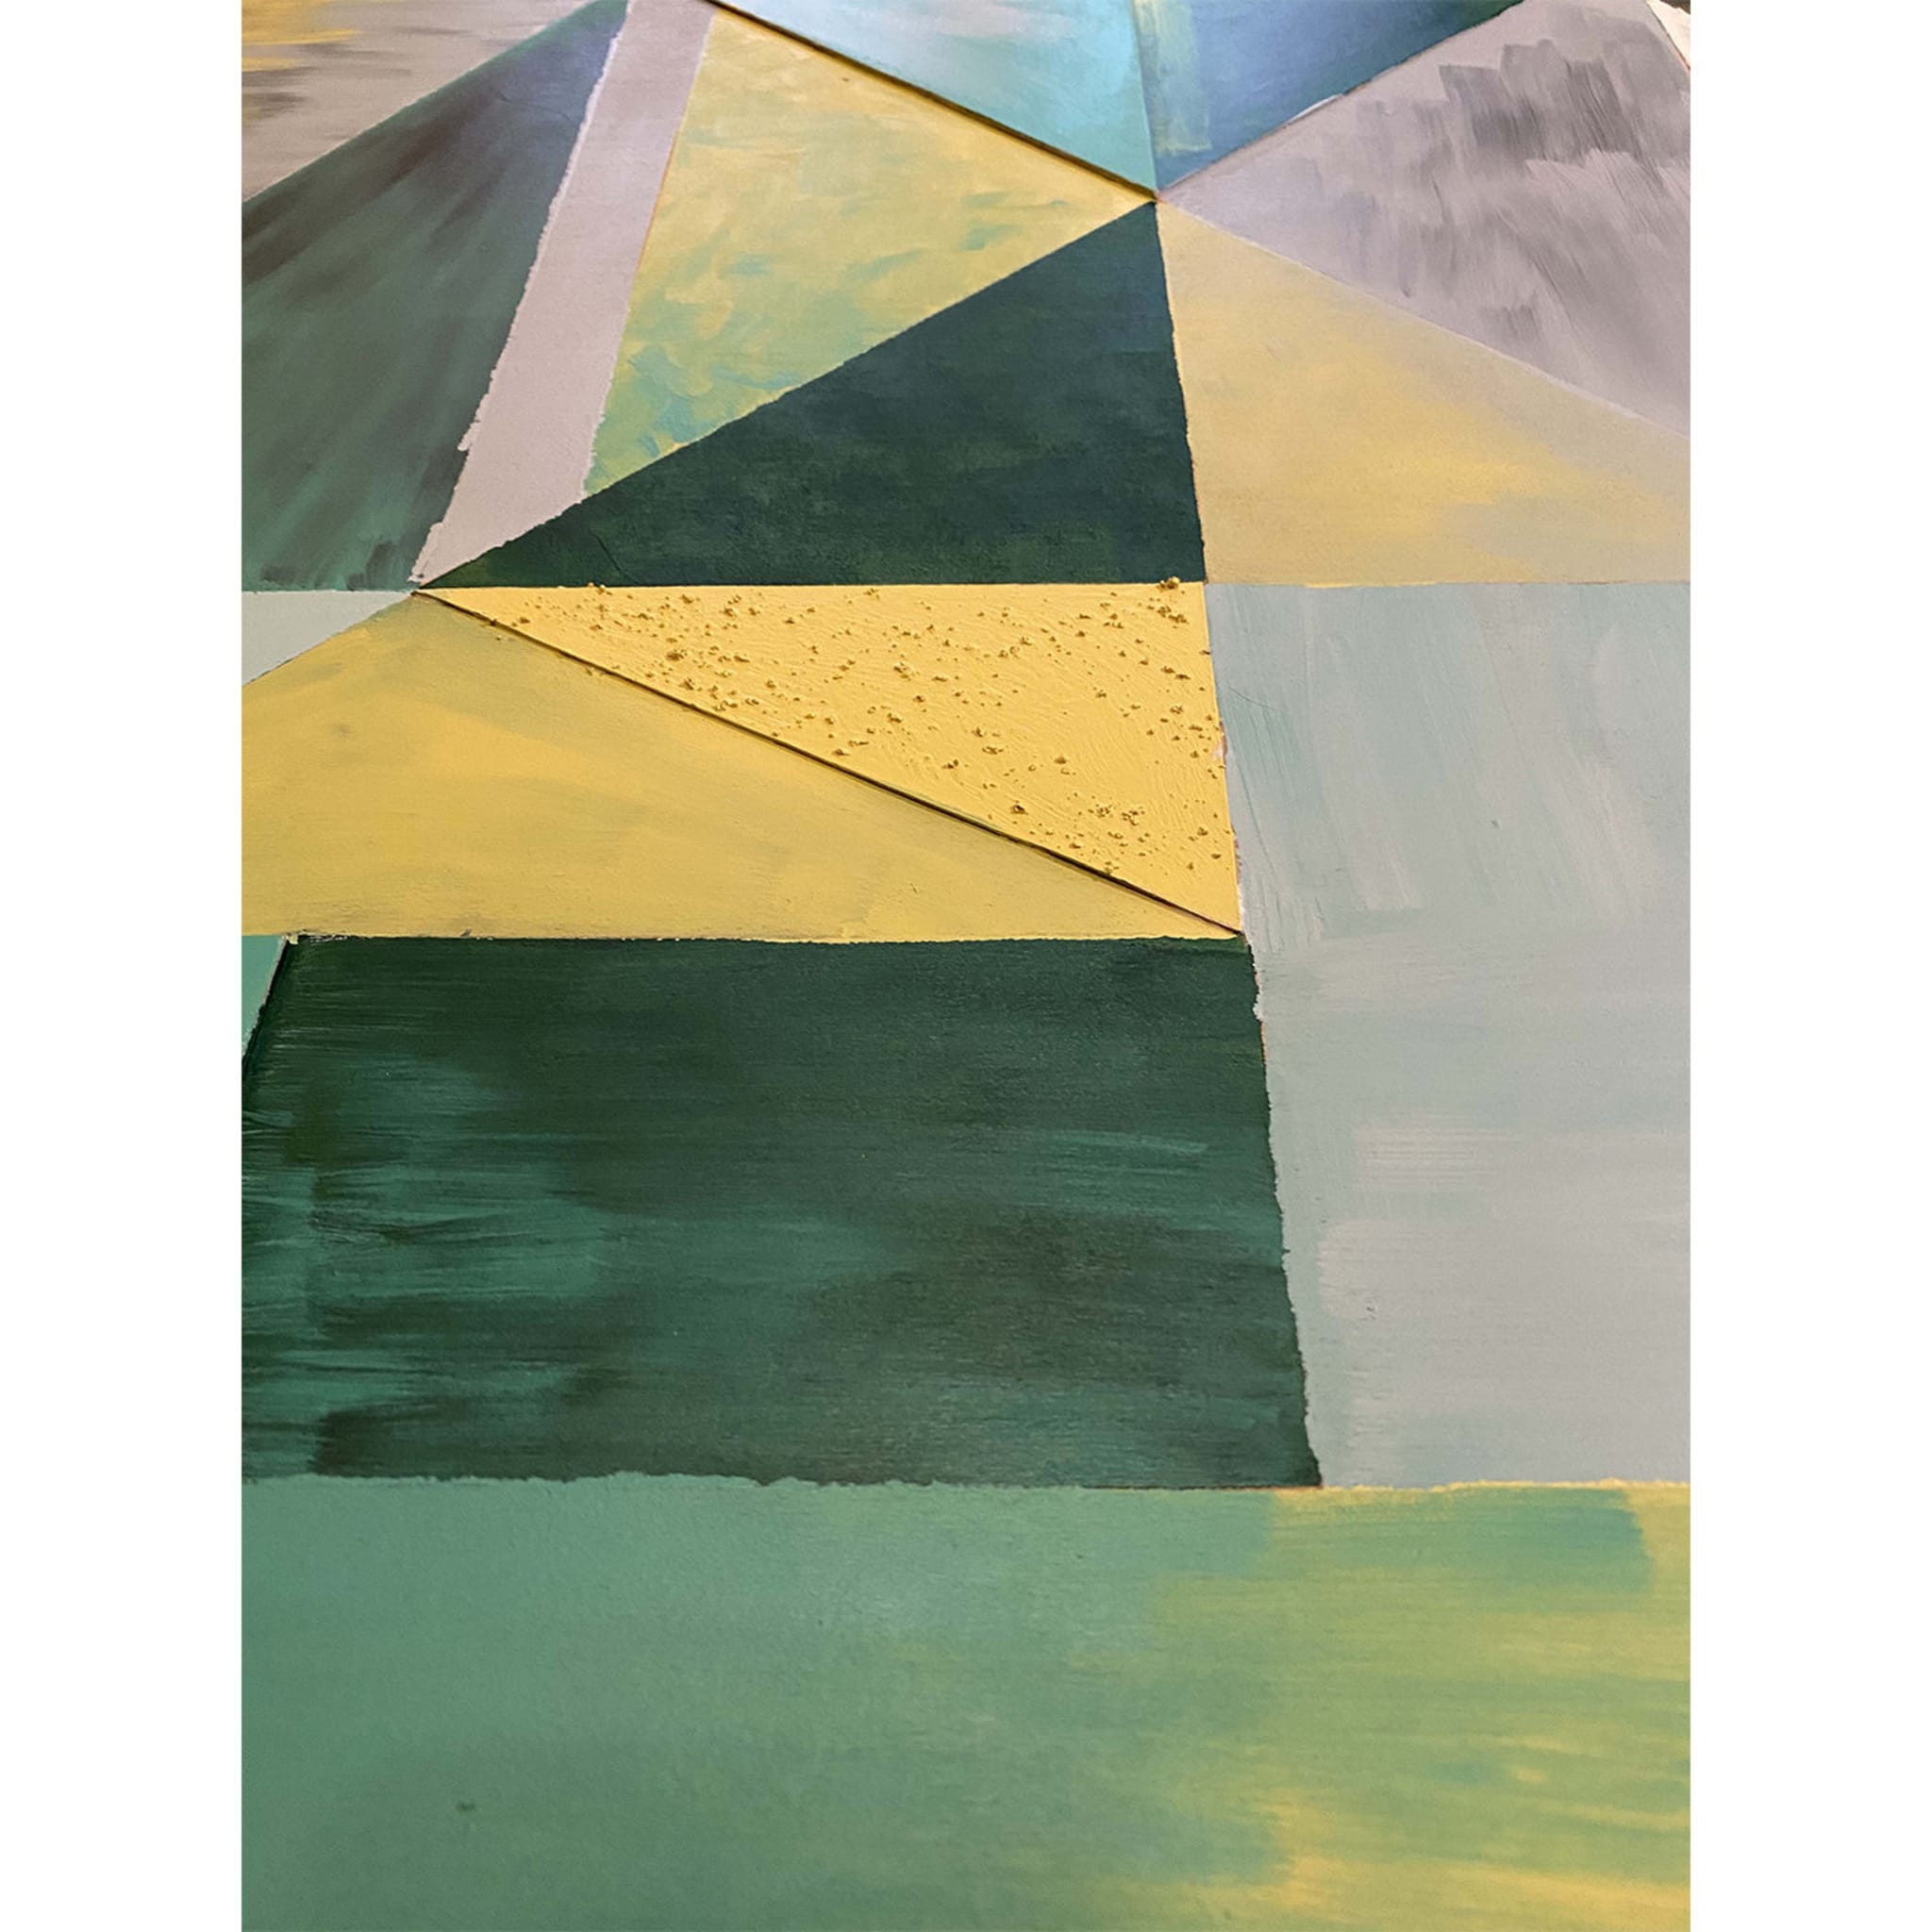 Geometrie Tre Wall Panel by Mascia Meccani 2019 - Alternative view 1